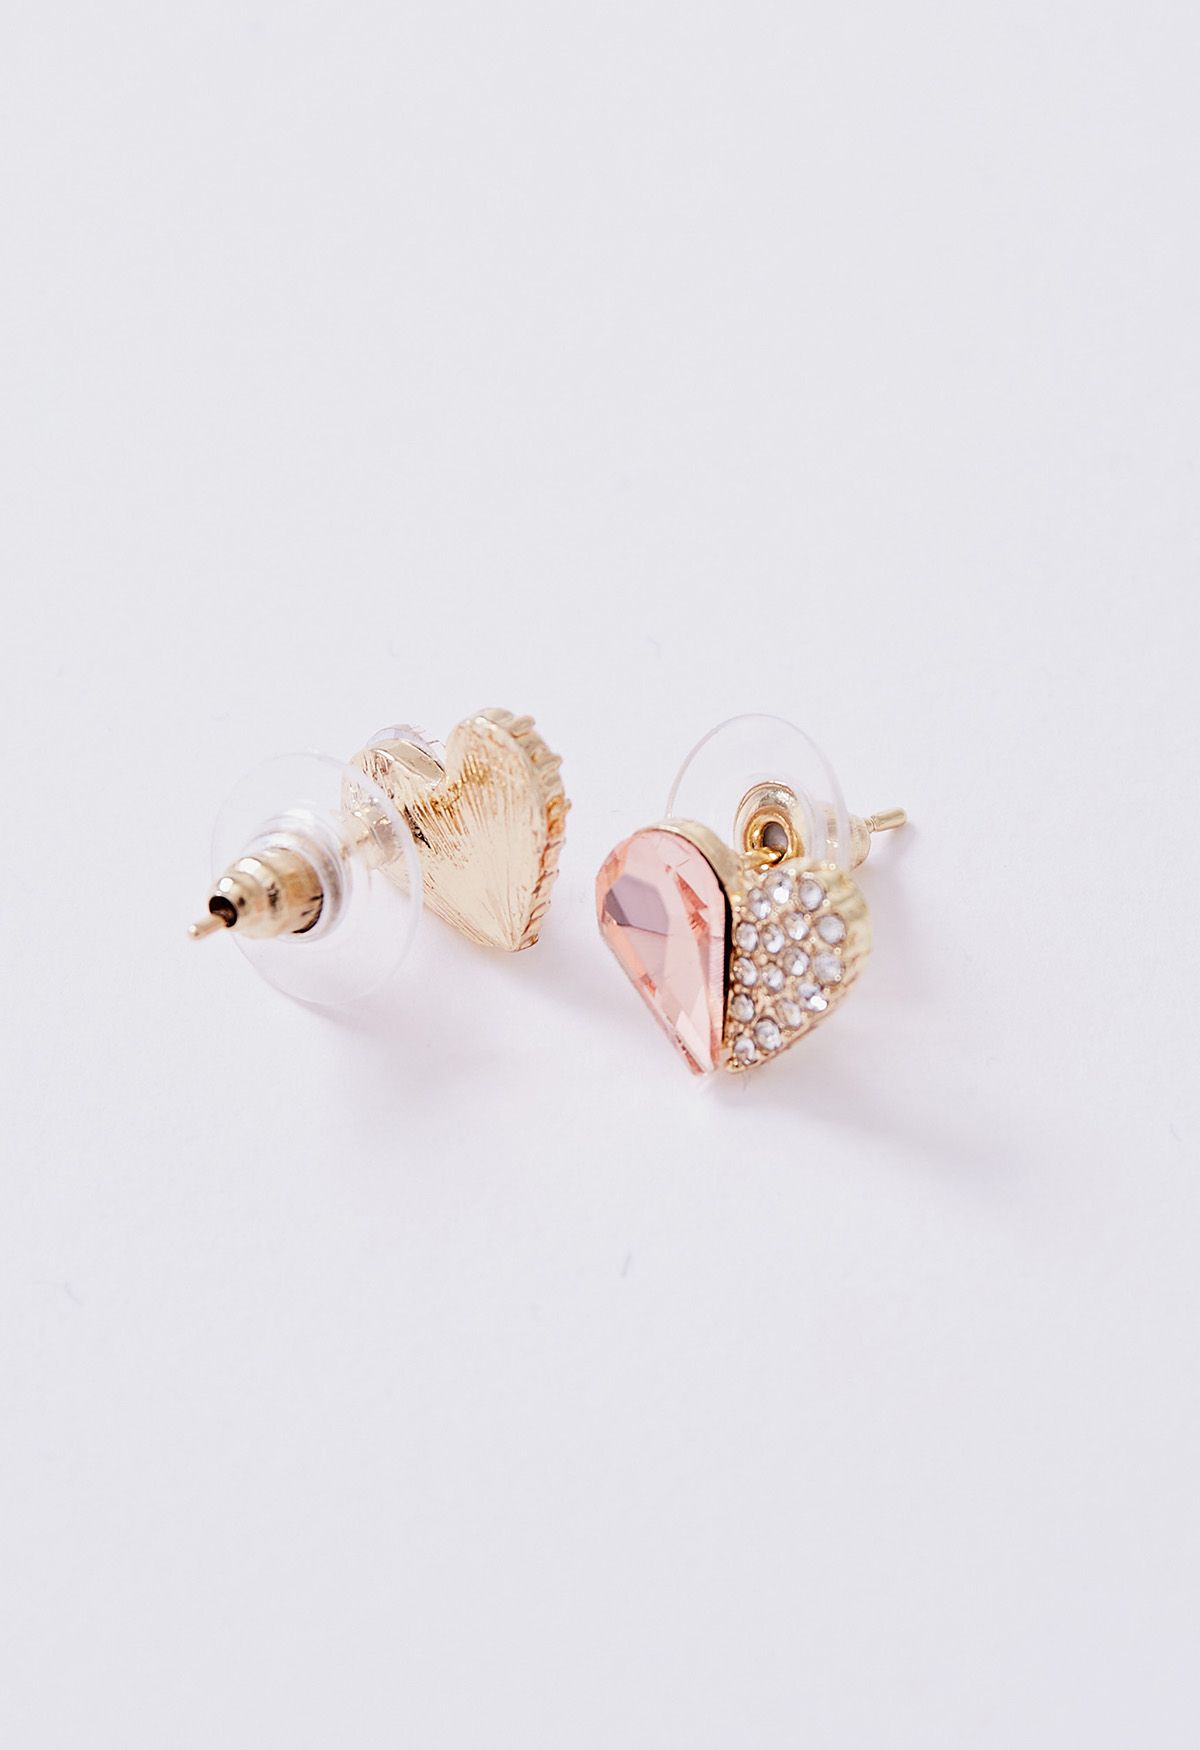 Heart Pink Crystal Rhinestone Earrings